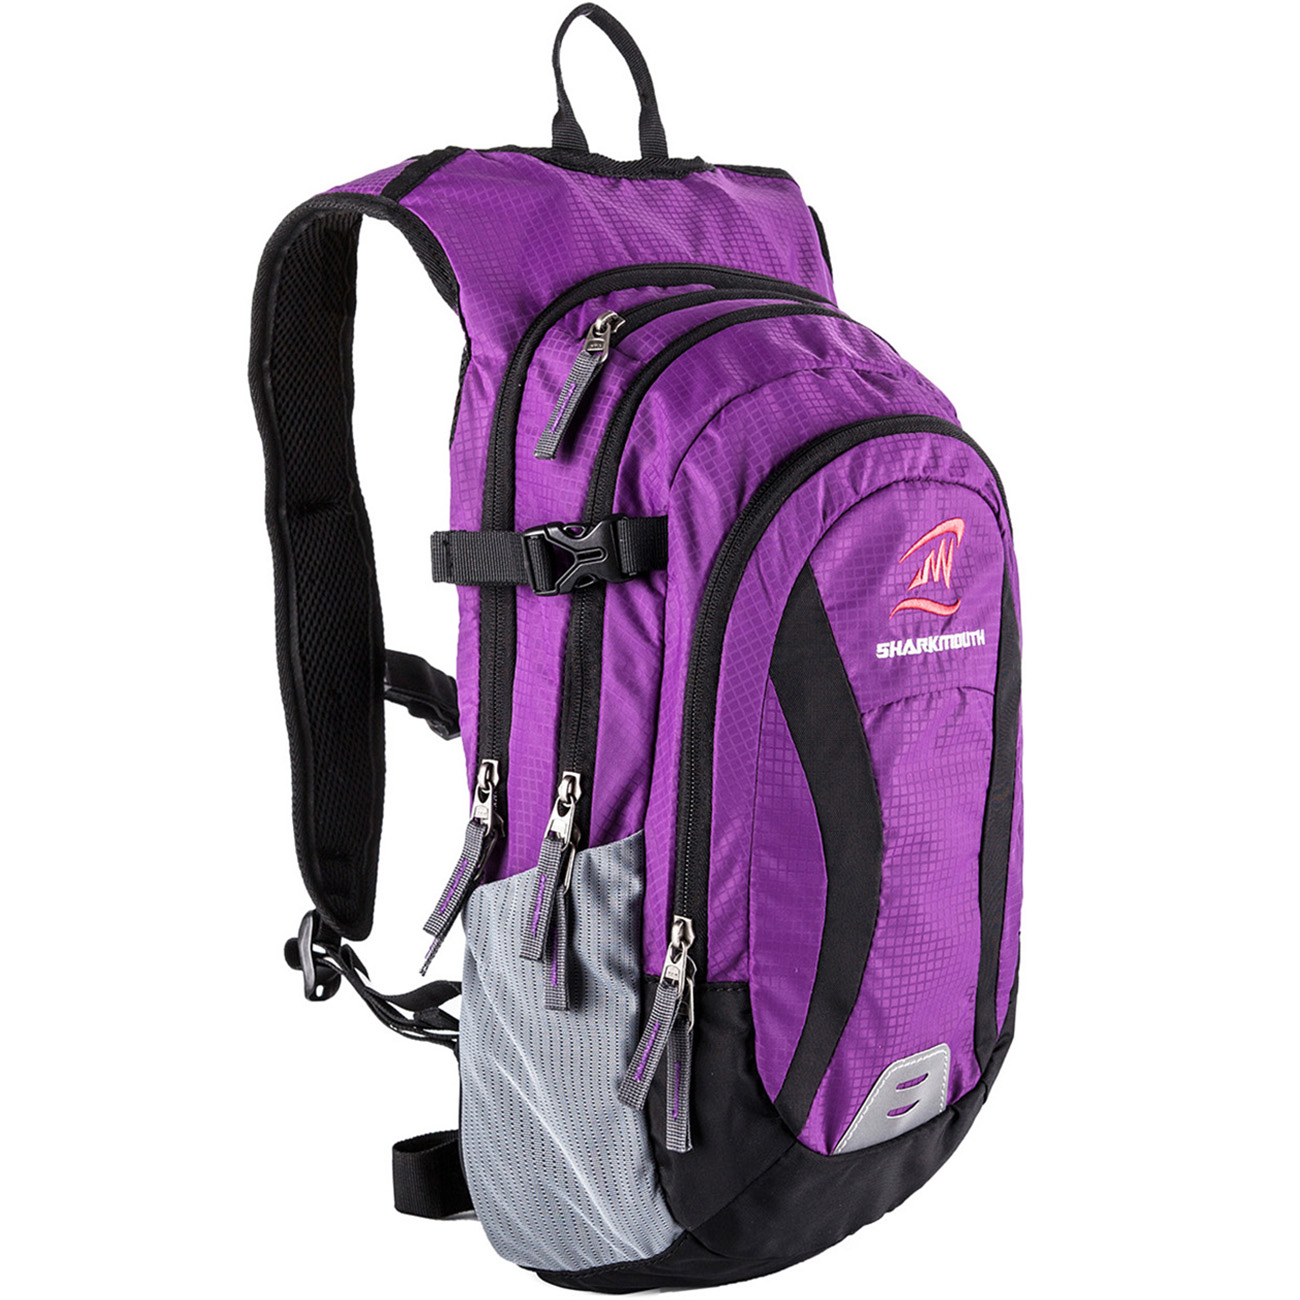 7602-purple-hydration-backpack-sharkmouth-sports